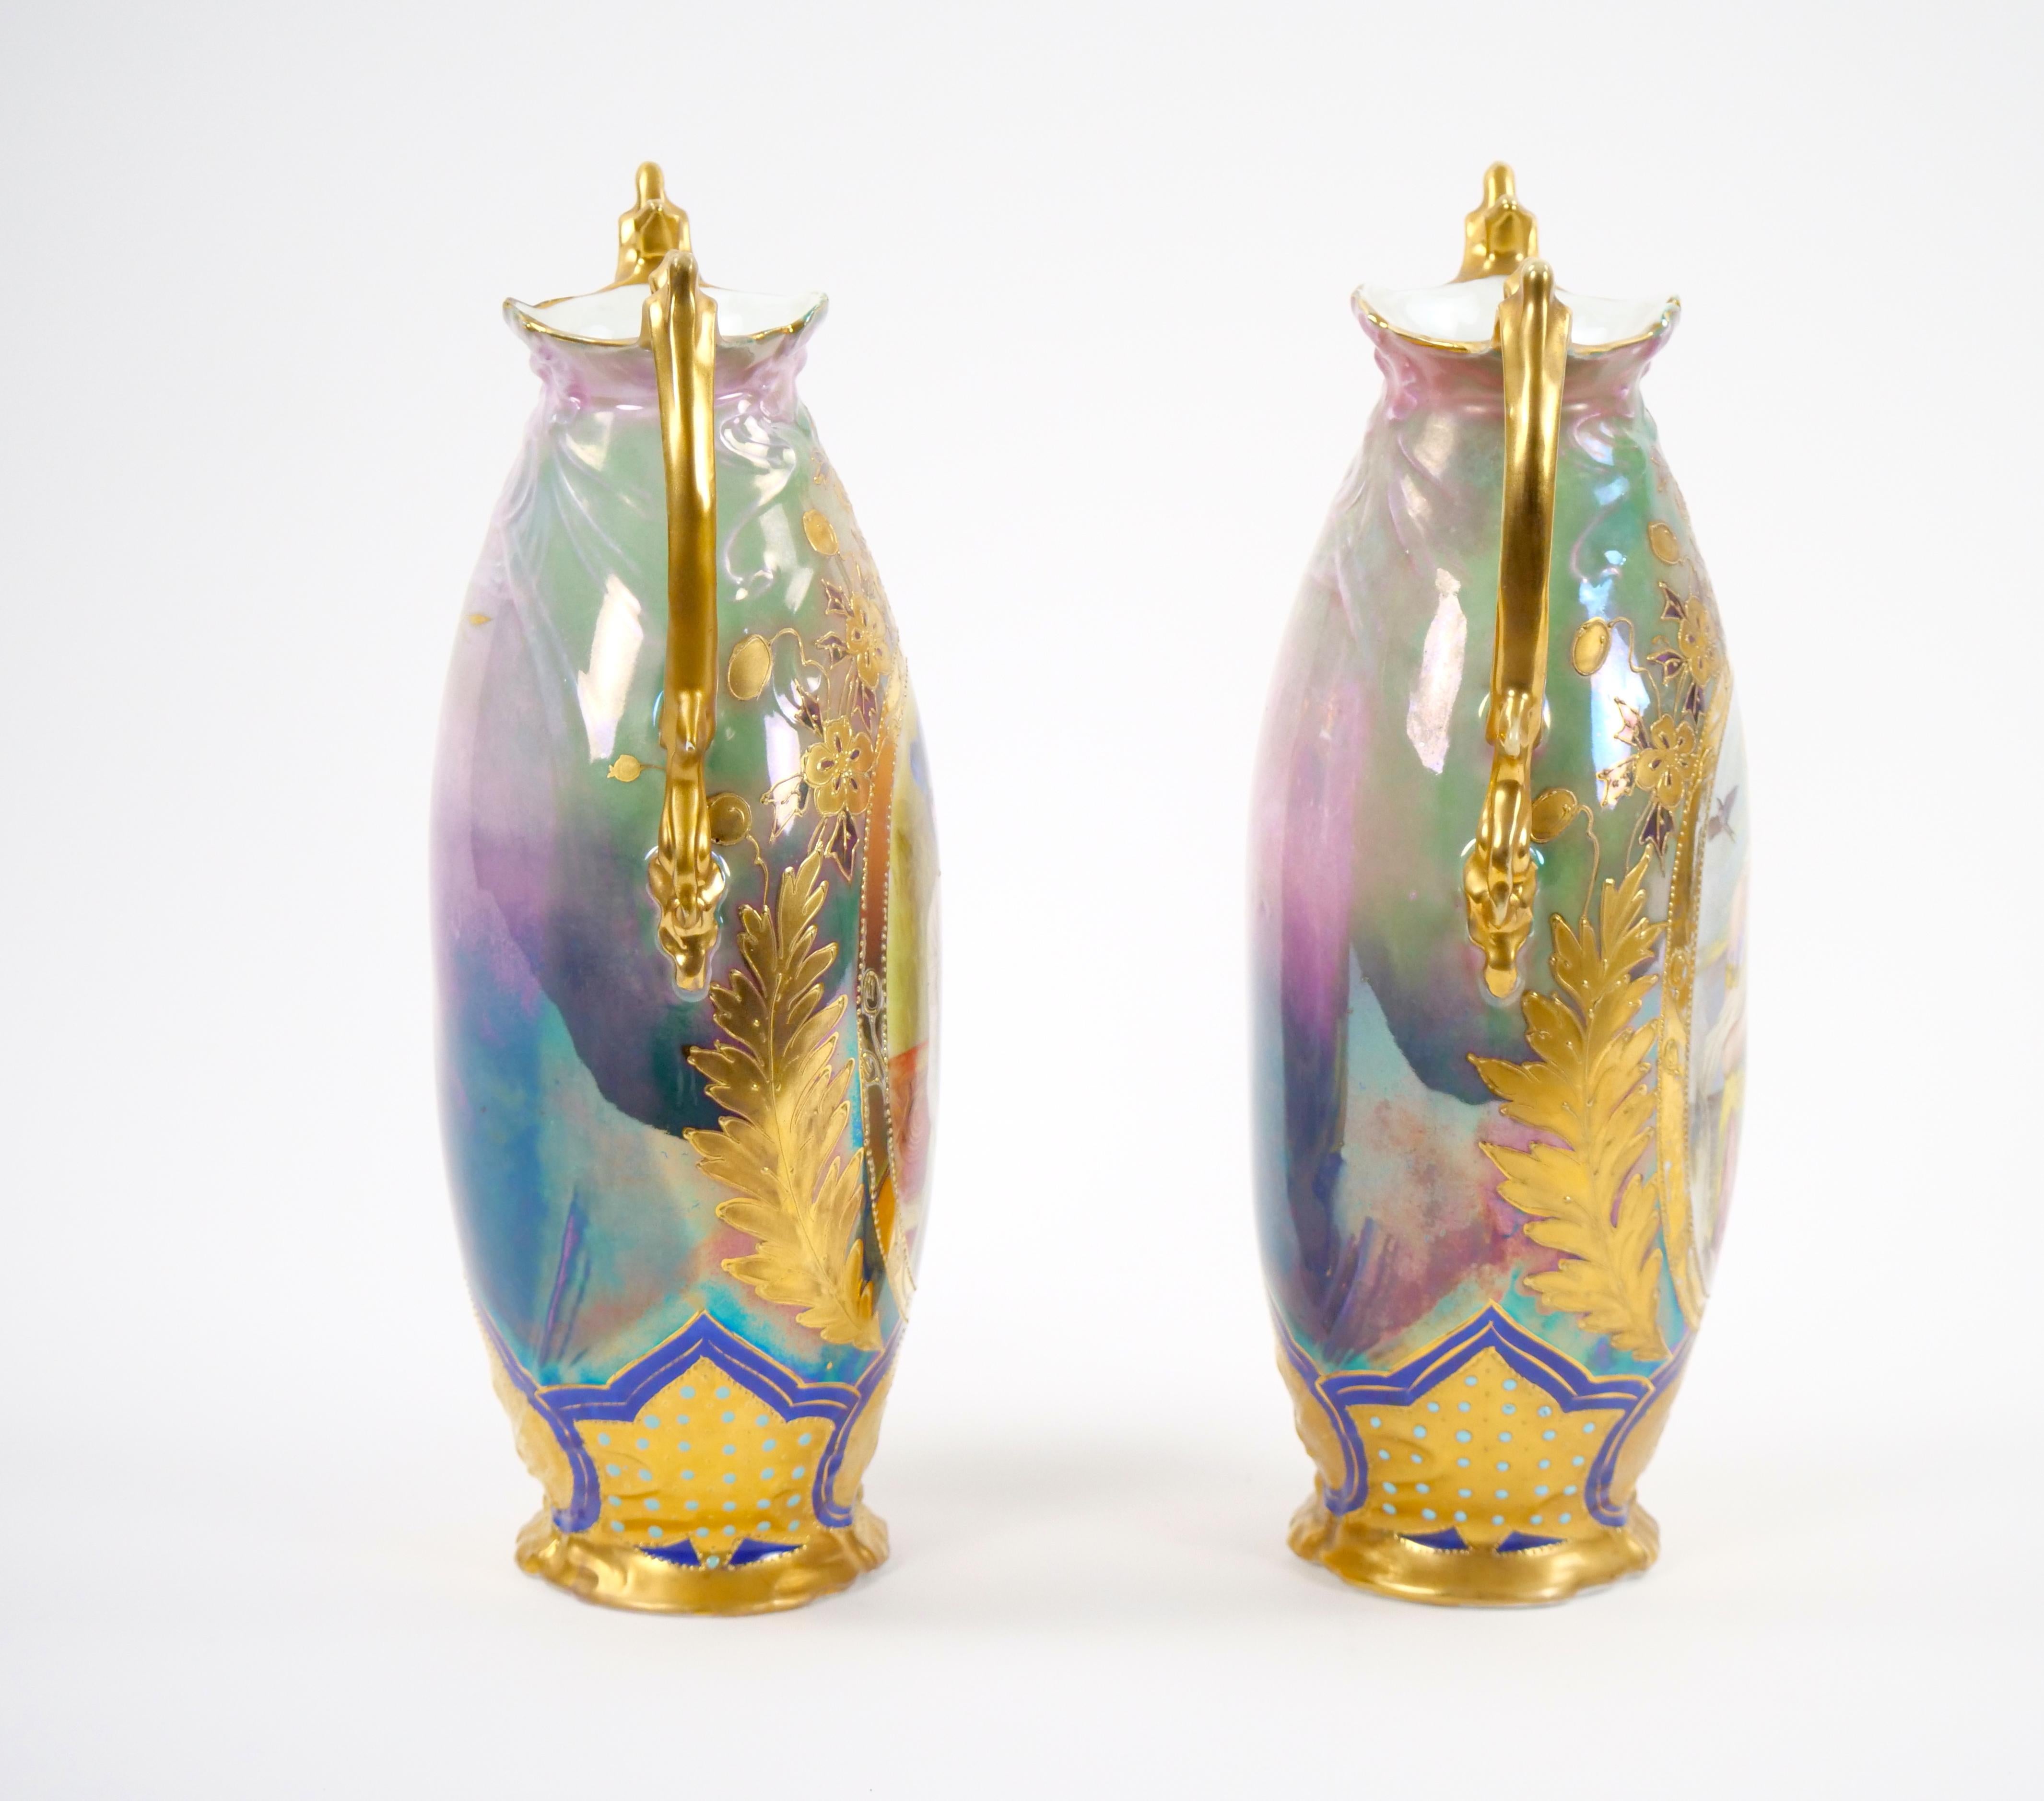 Early 20th Century German Art Nouveau Hand-Painted / Gilt Porcelain Vases For Sale 3